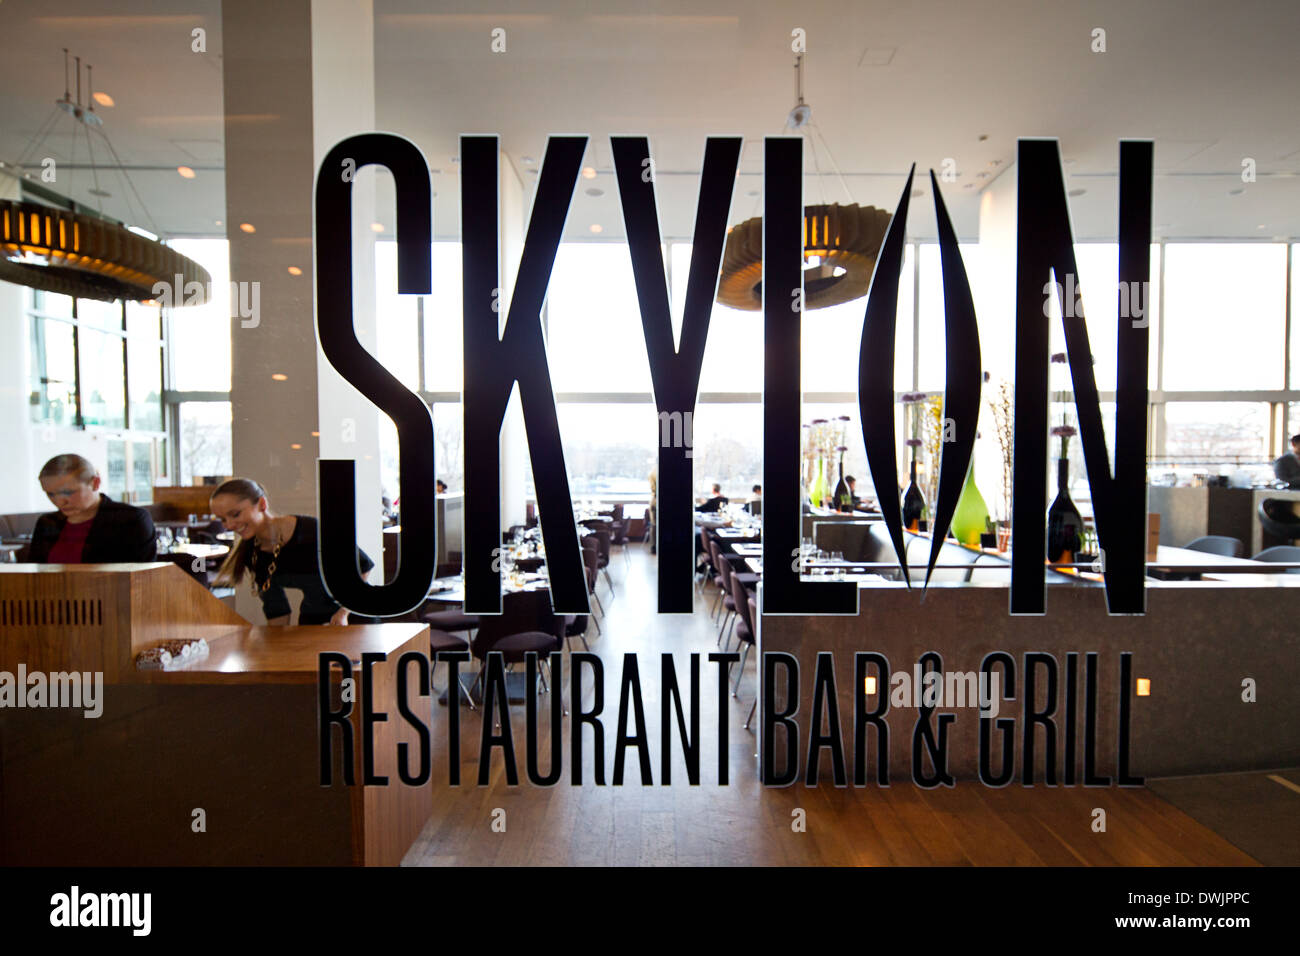 The Skylon rooftop restaurant, bar & grill, inside the Royal Festival Hall. The Southbank complex, London. Stock Photo